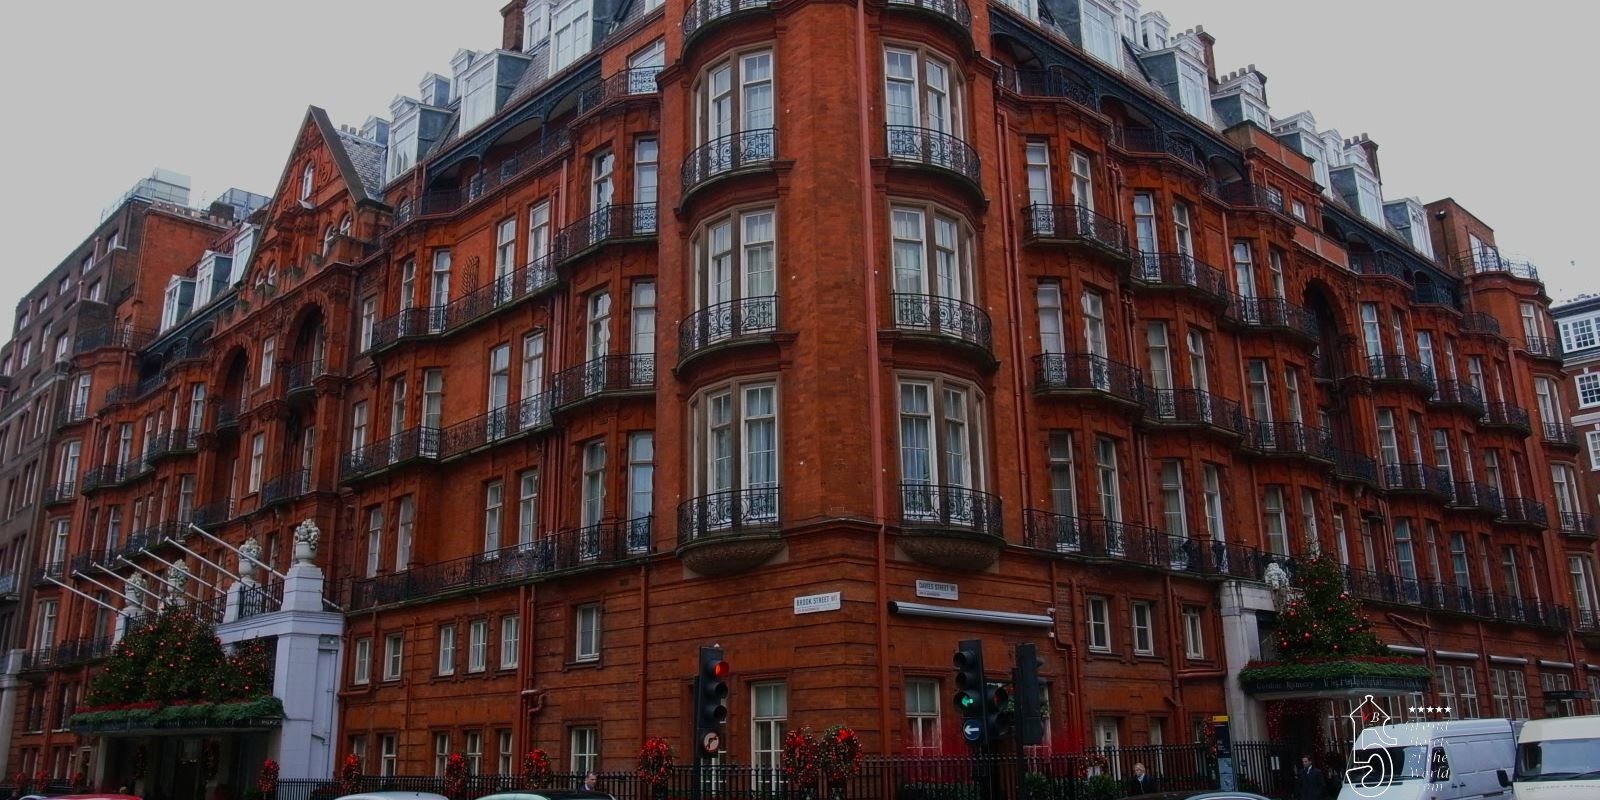 Hotel Claridges in London